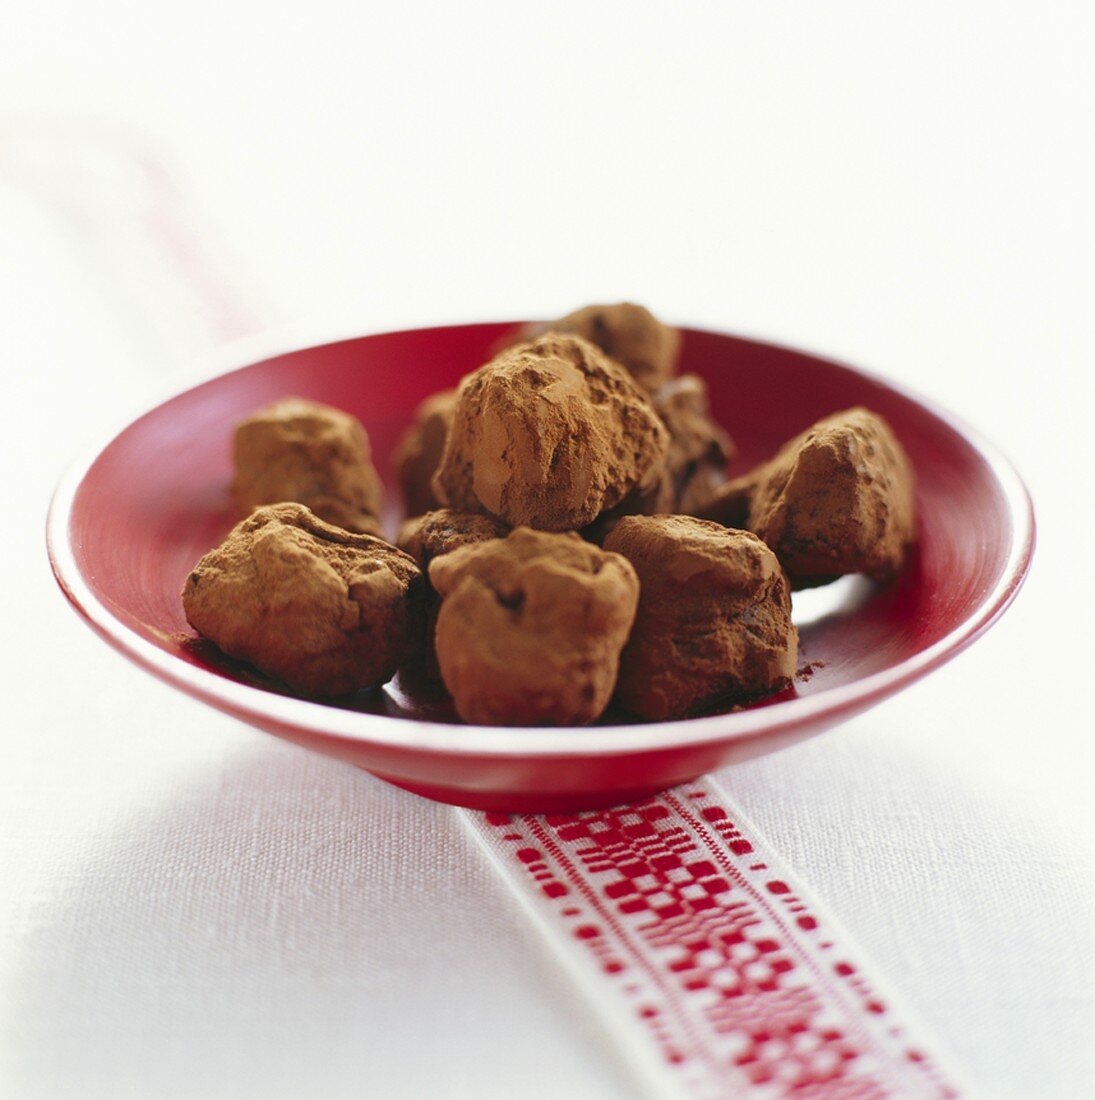 Chocolate truffles in red dish